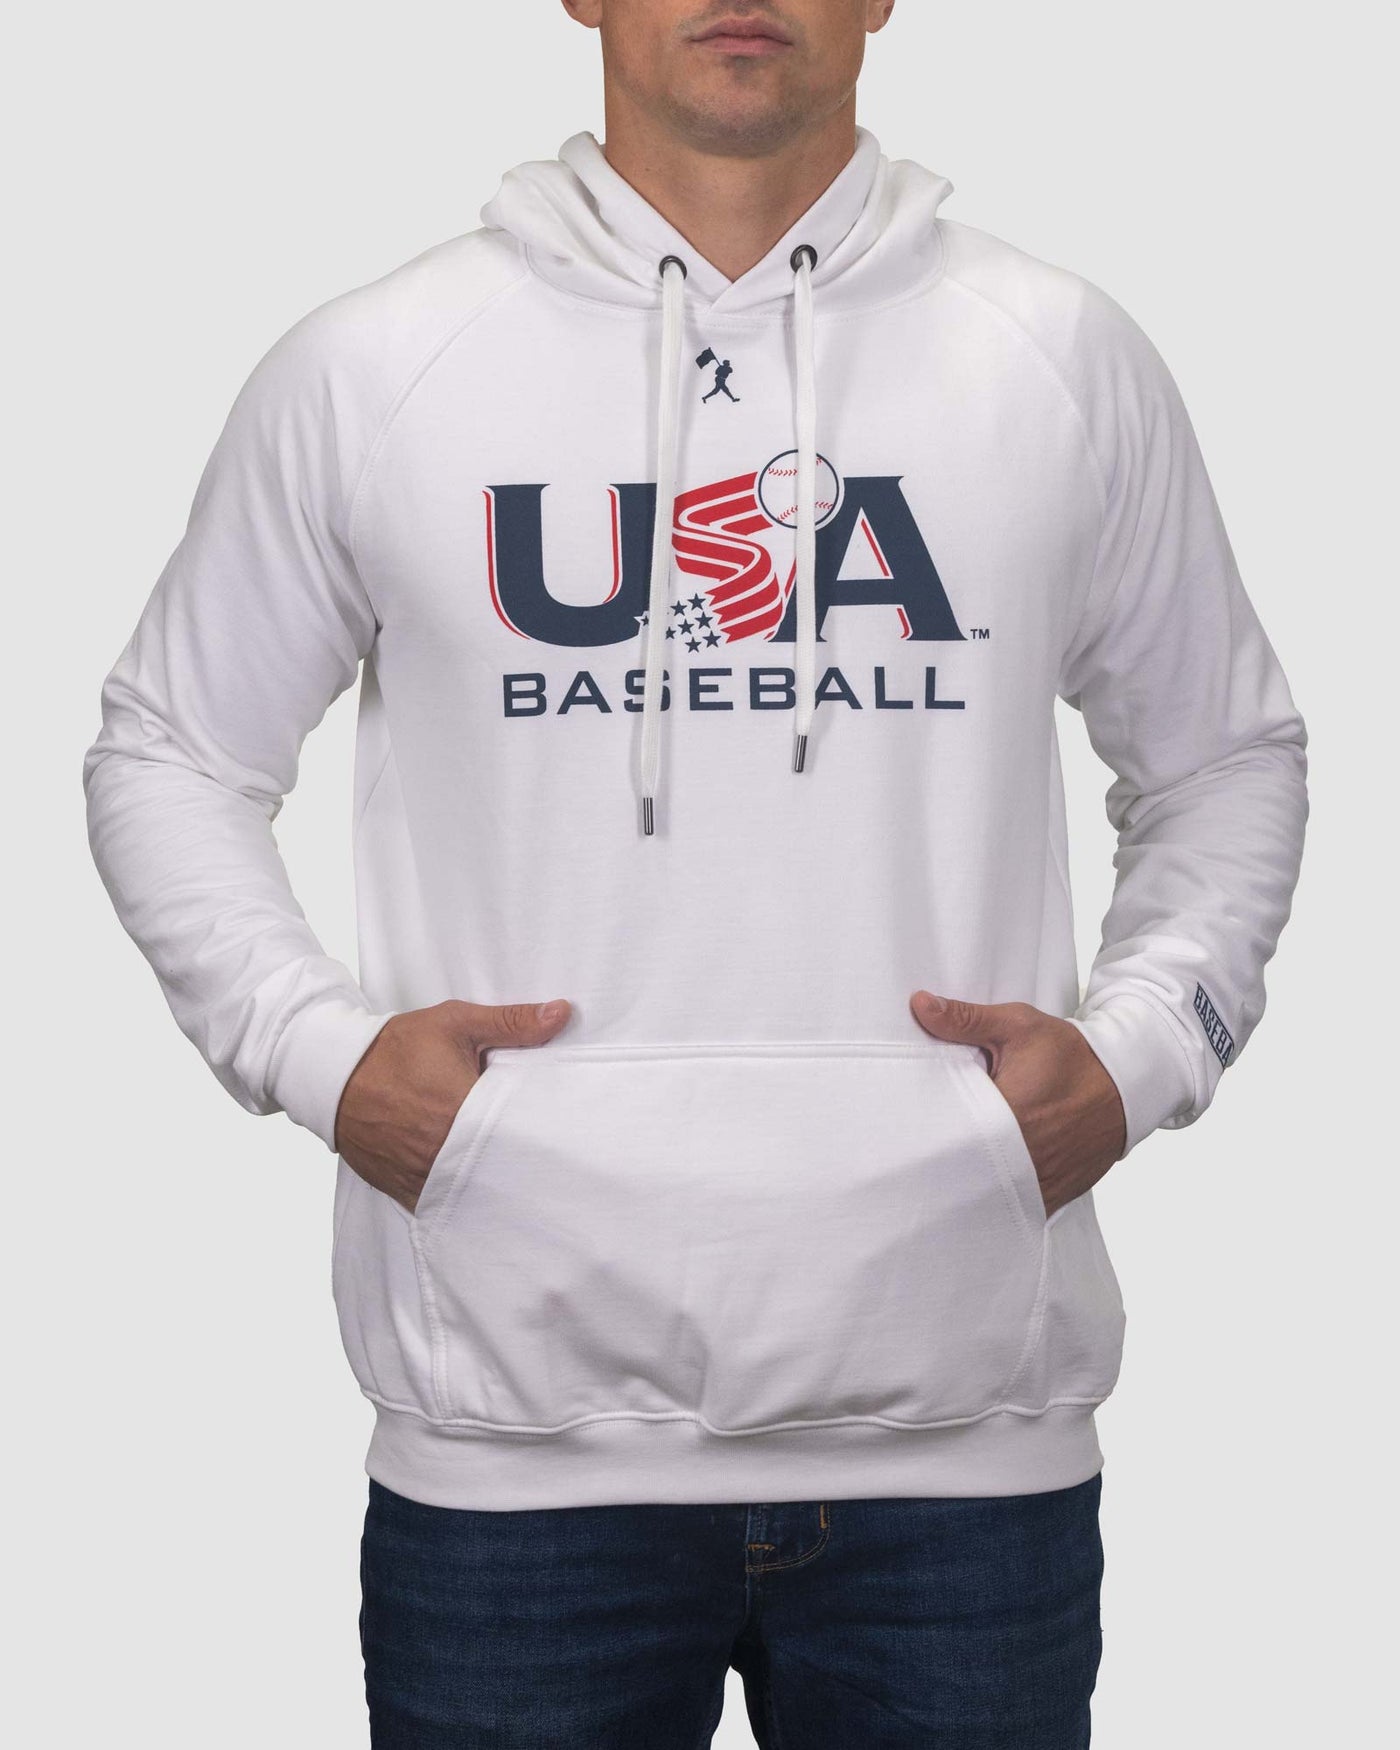 Baseballism x USA Baseball Hoodie - White